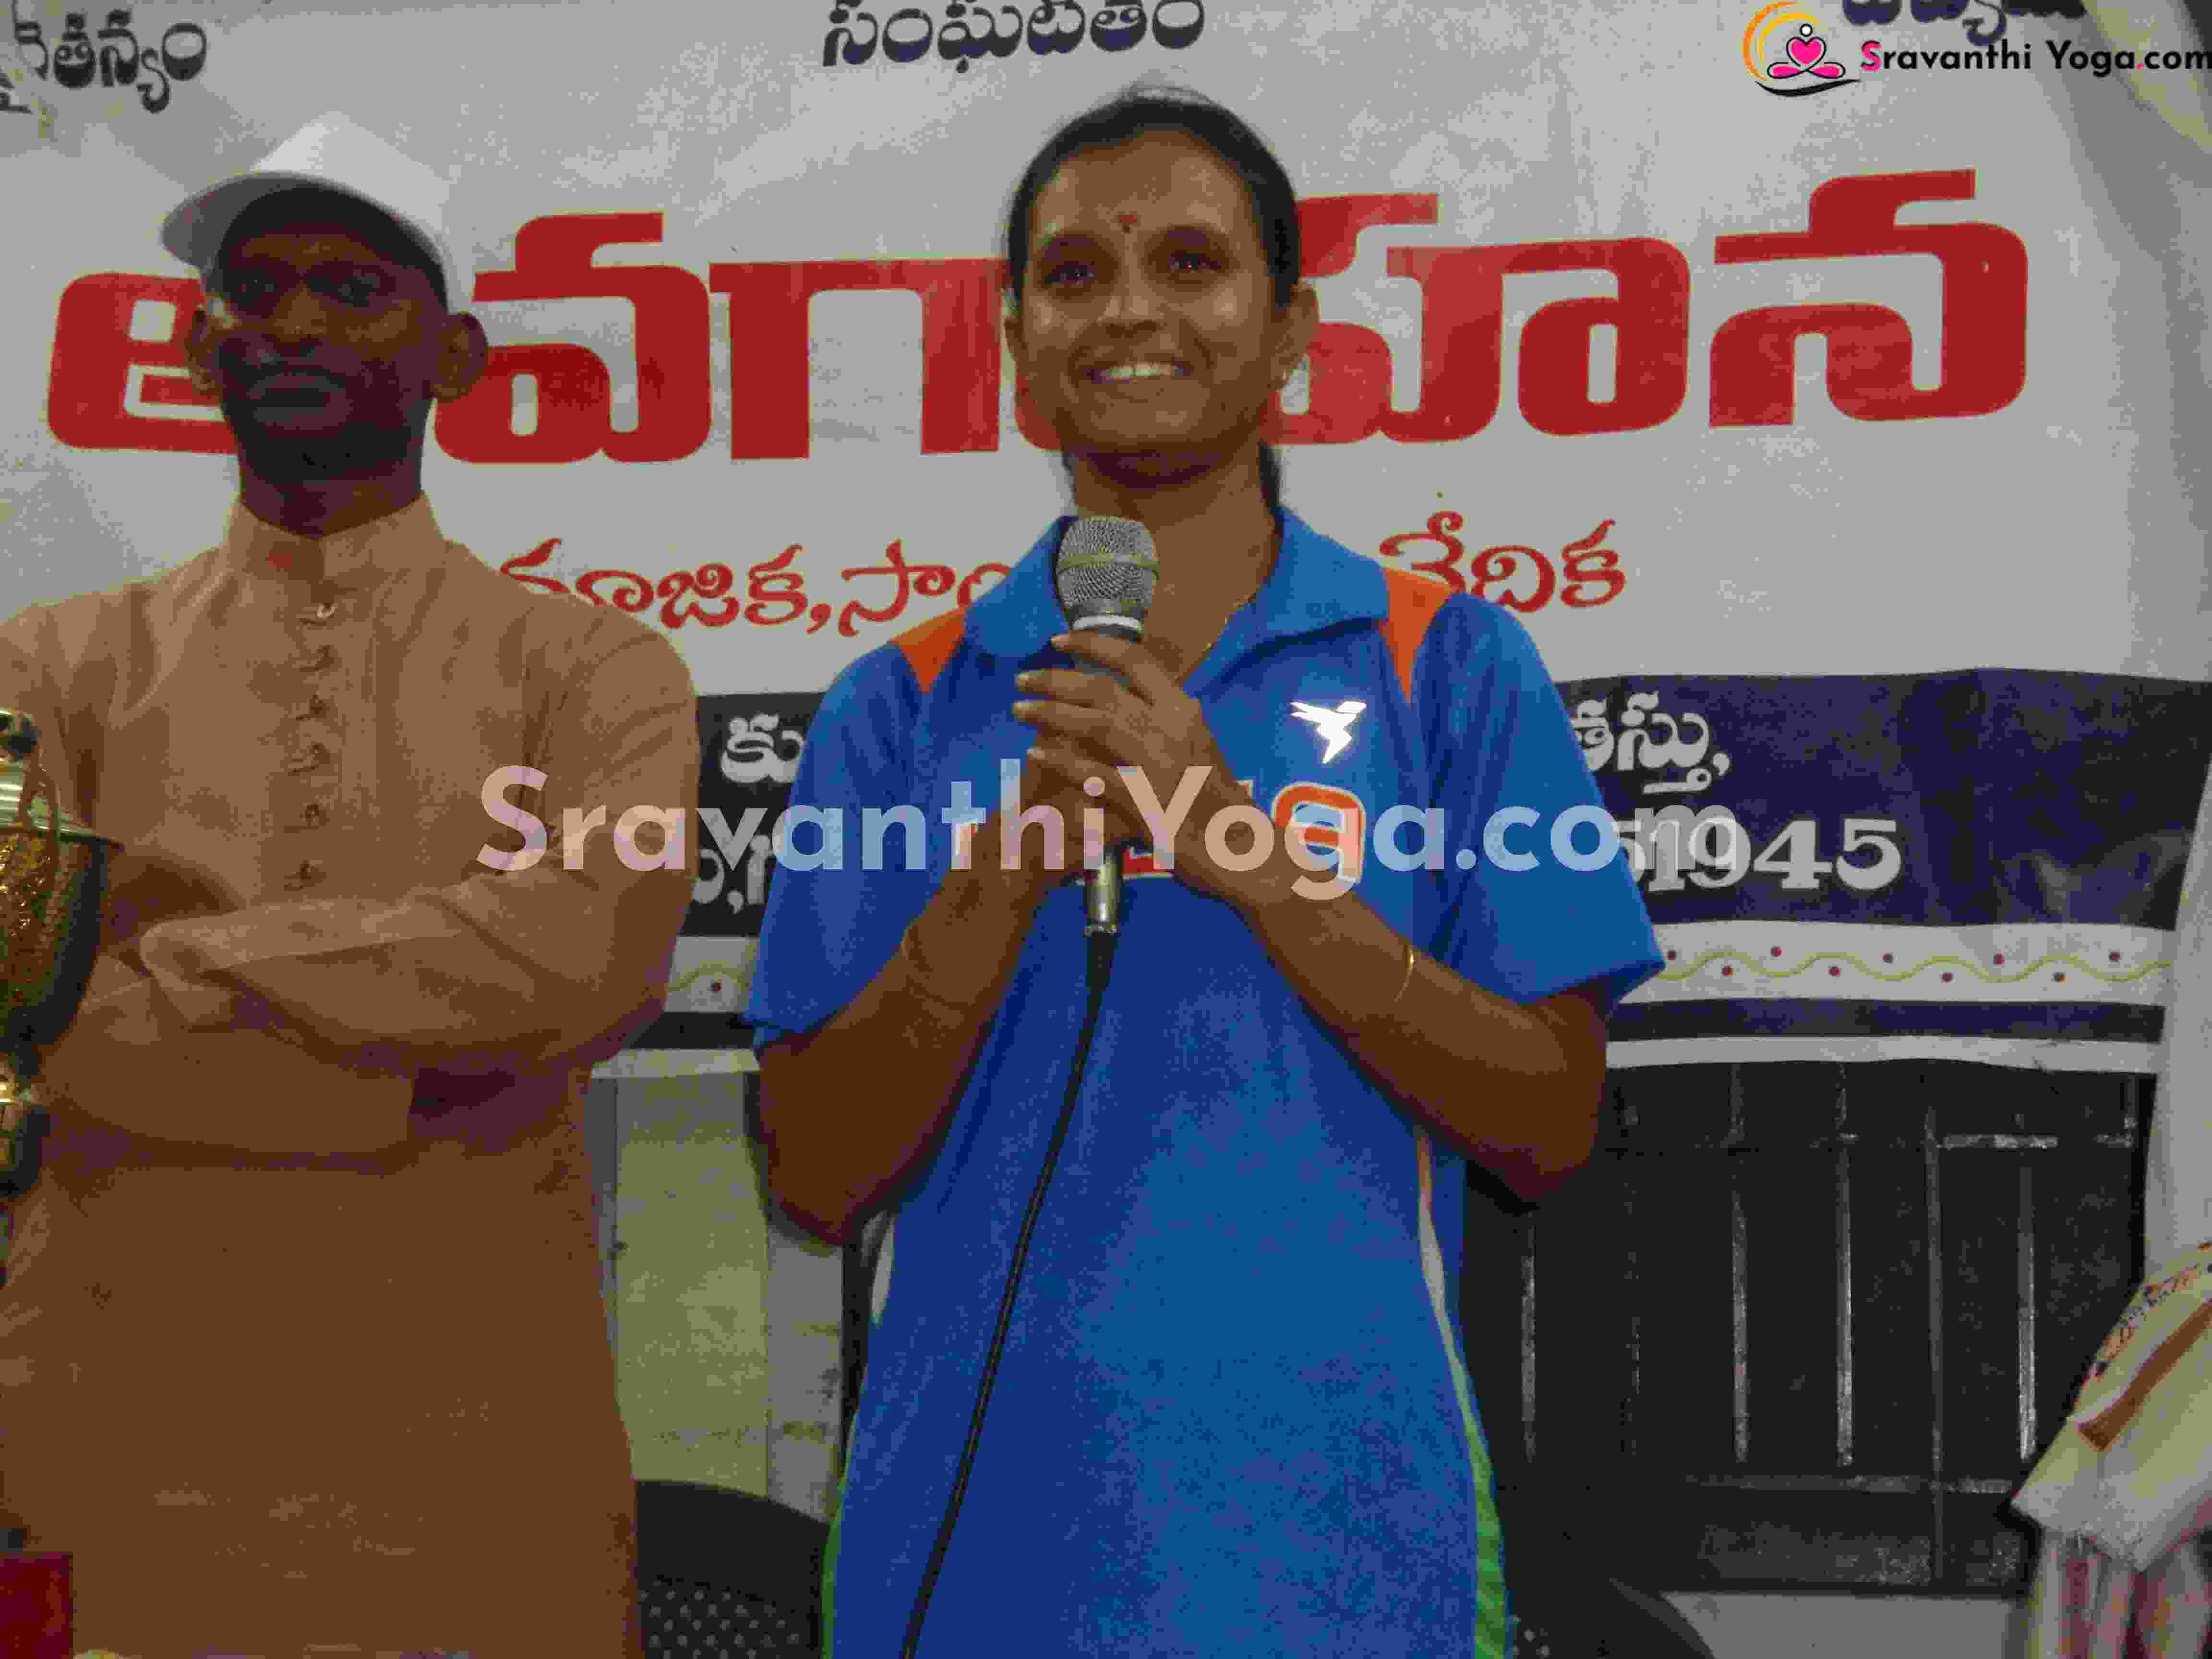 speech at yoga center guntur3-yoga sravanthi